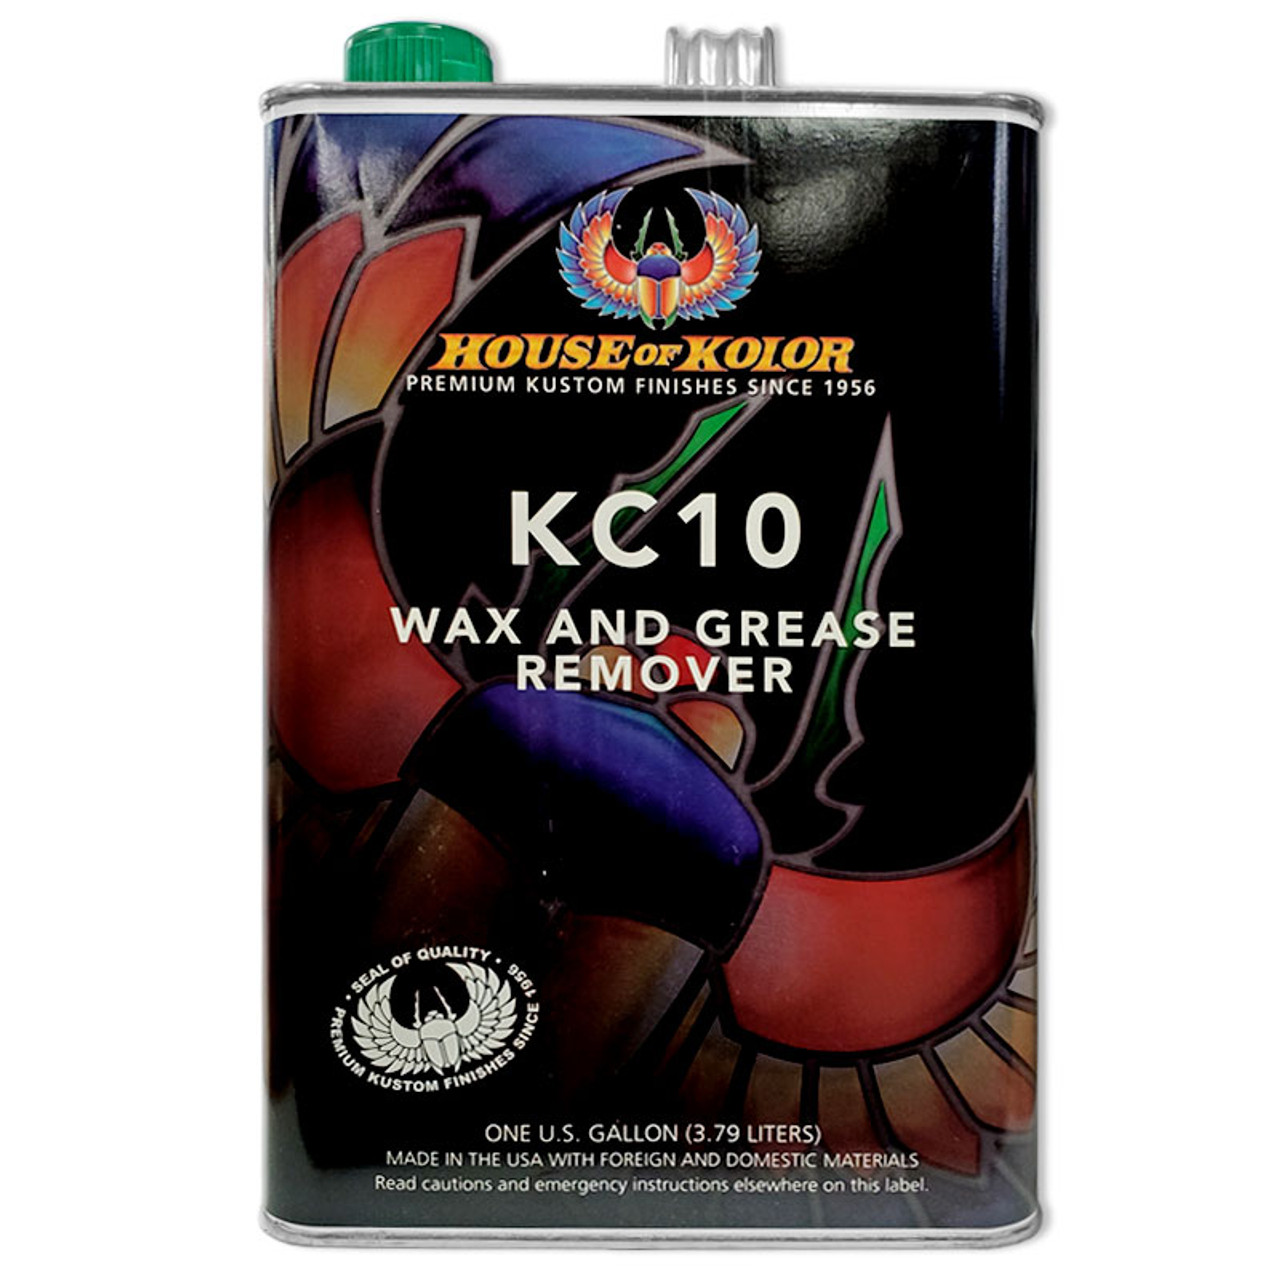 SprayMAX - Wax & Grease Remover